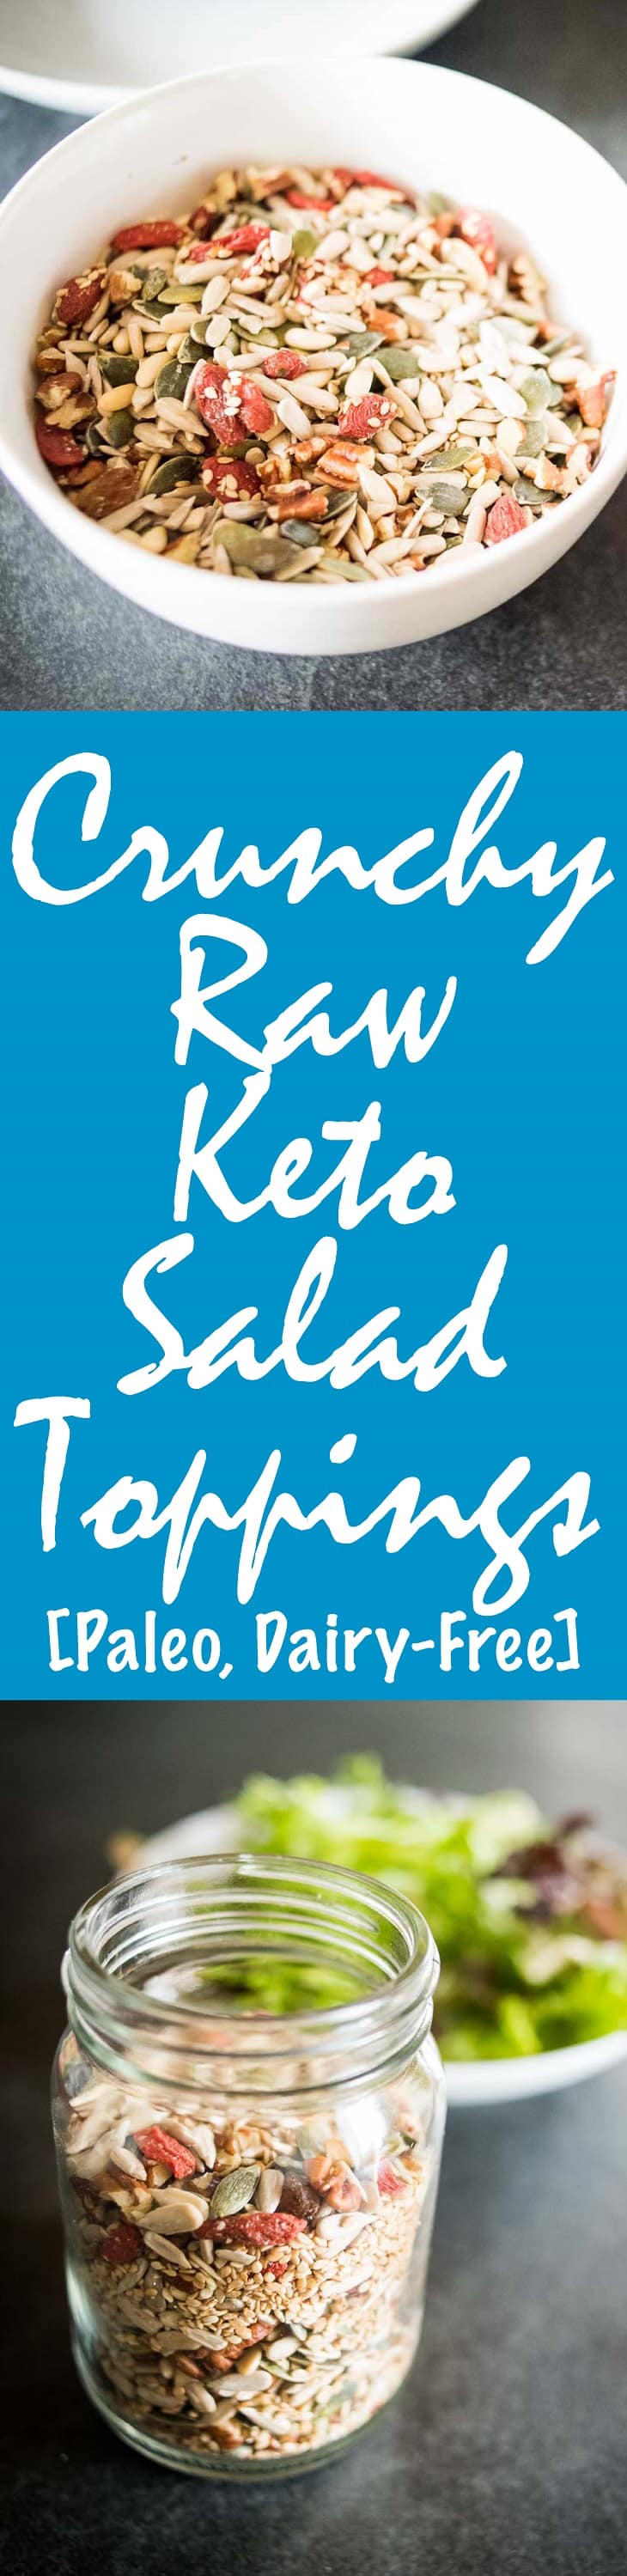 Crunchy Raw Keto Salad Toppings Recipe [Paleo, Dairy-Free] #keto #recipe https://ketosummit.com/keto-salad-toppings-recipe